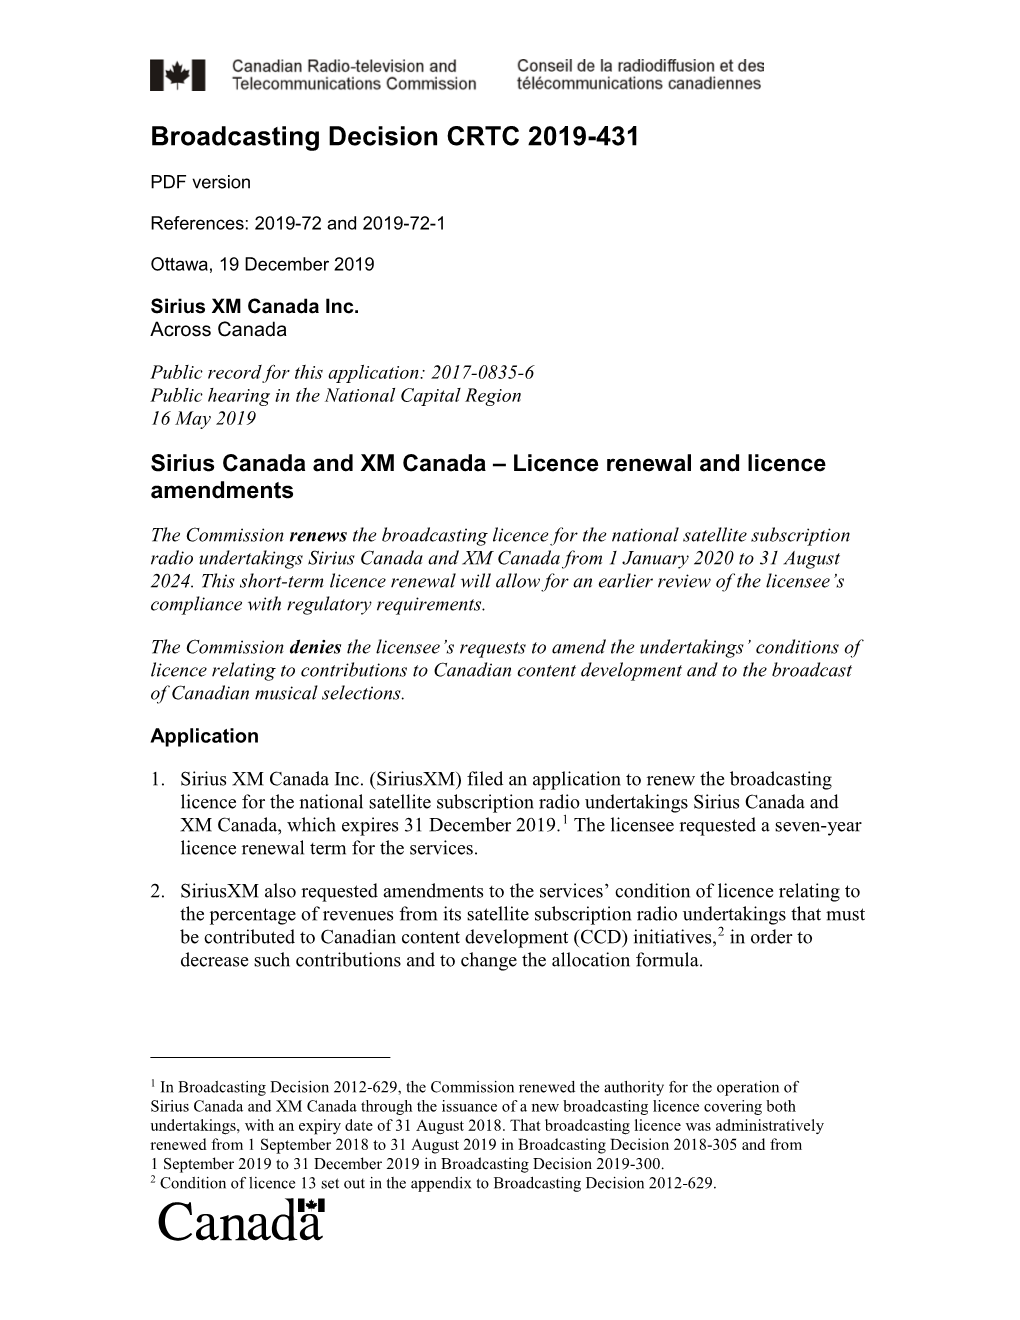 Sirius Canada and XM Canada – Licence Renewal and Licence Amendments